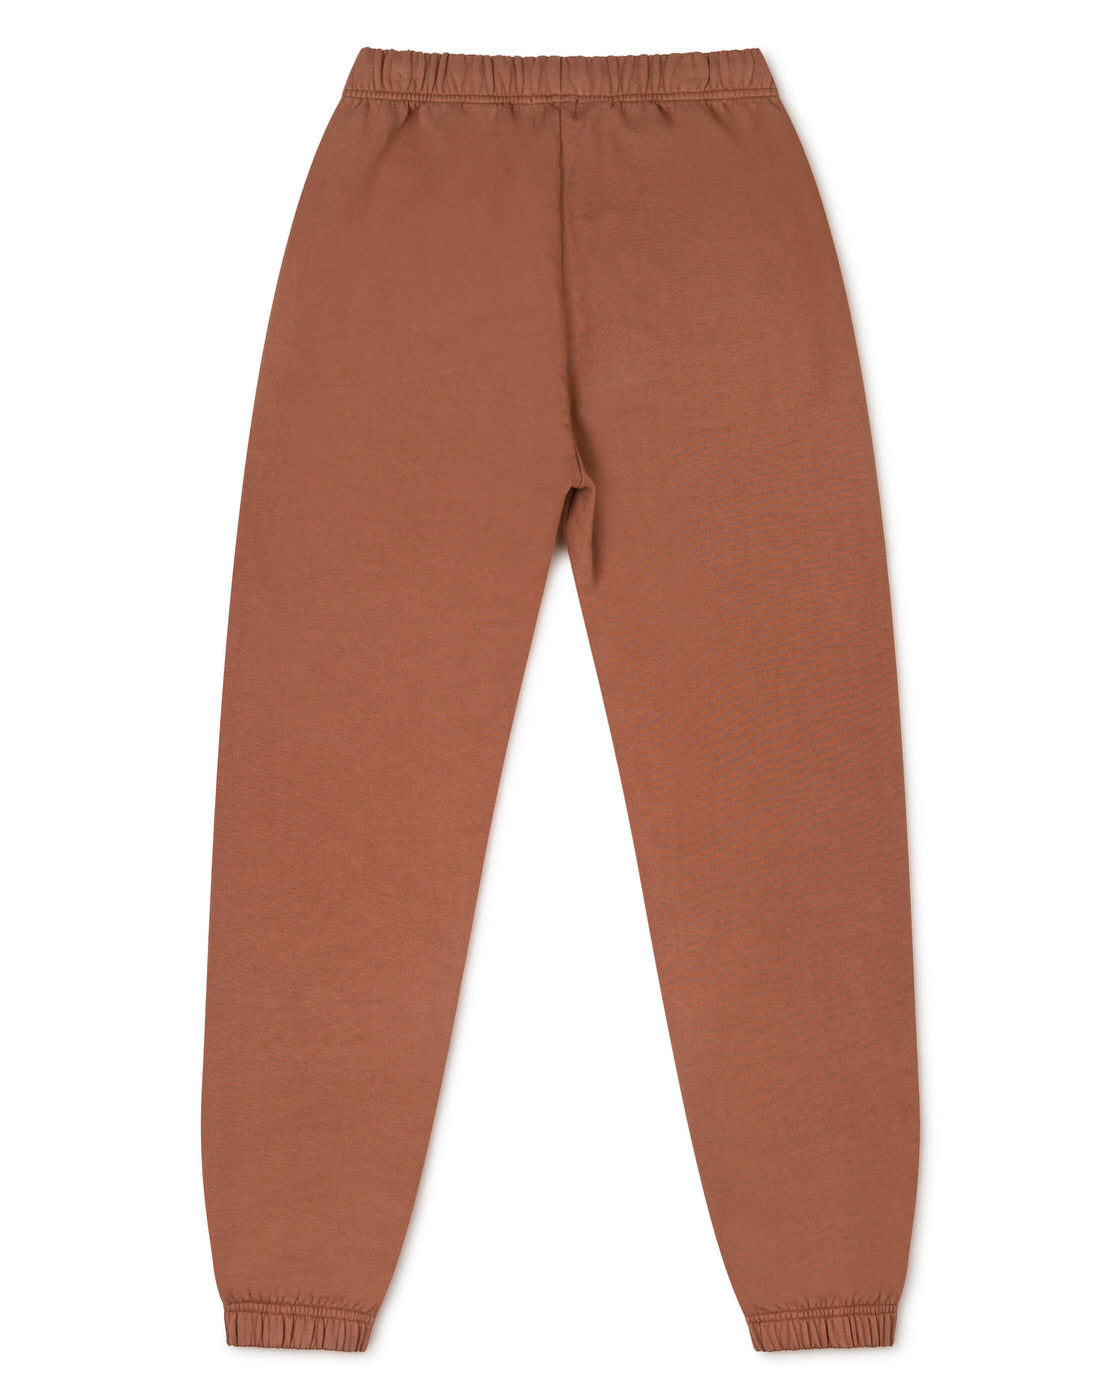 Brown cedar jogging pants made of organic cotton fleece from Matona